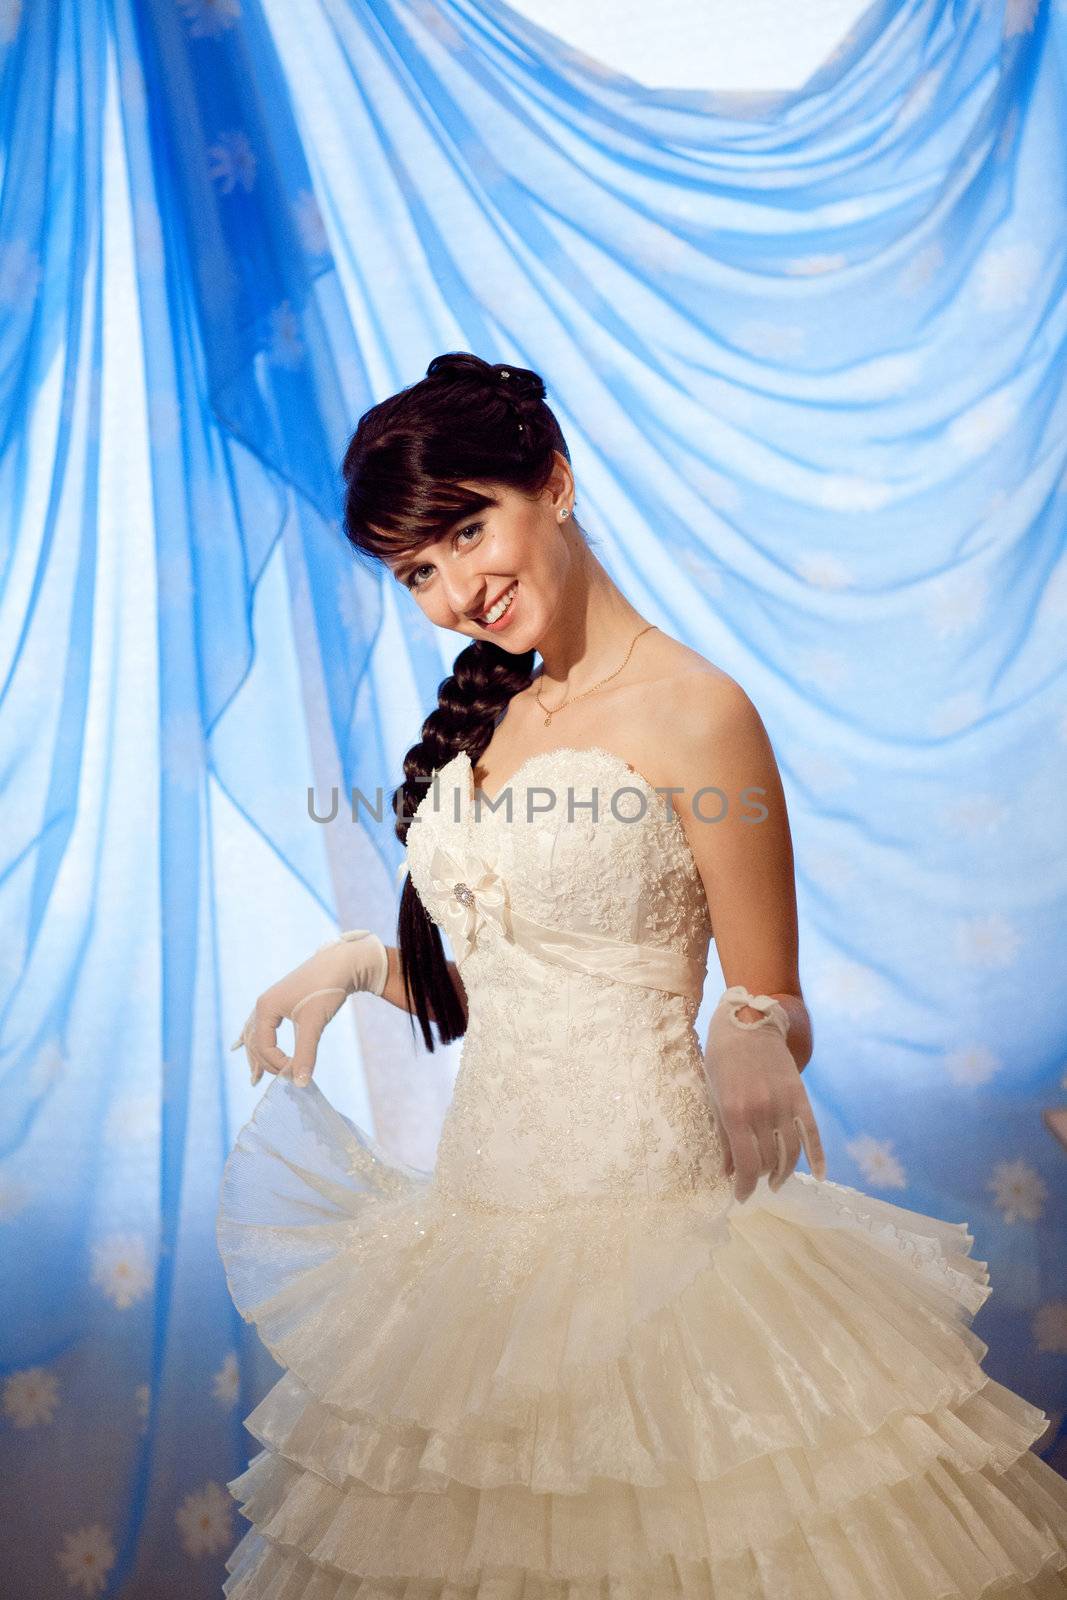 happy bride and dress by vsurkov